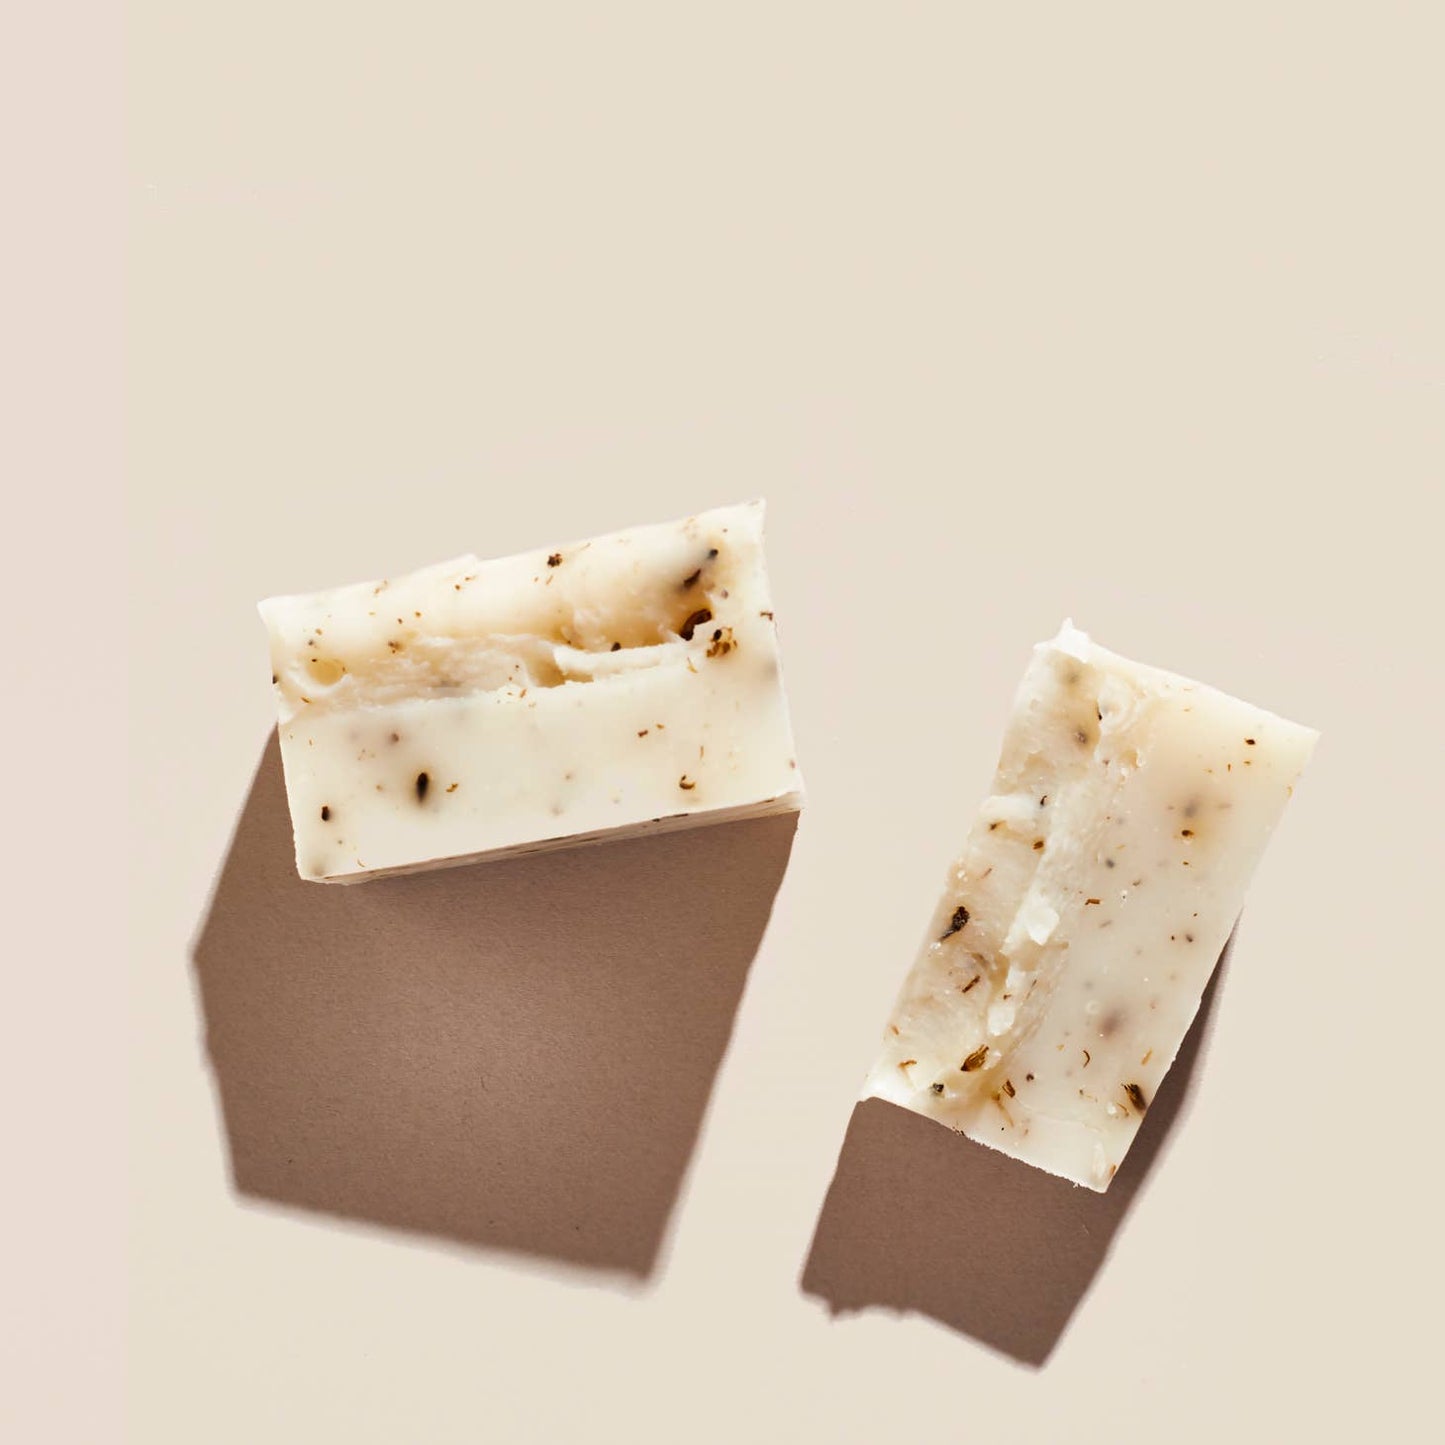 Palermo's Lavender + Sage soap bar, shown broken in half.